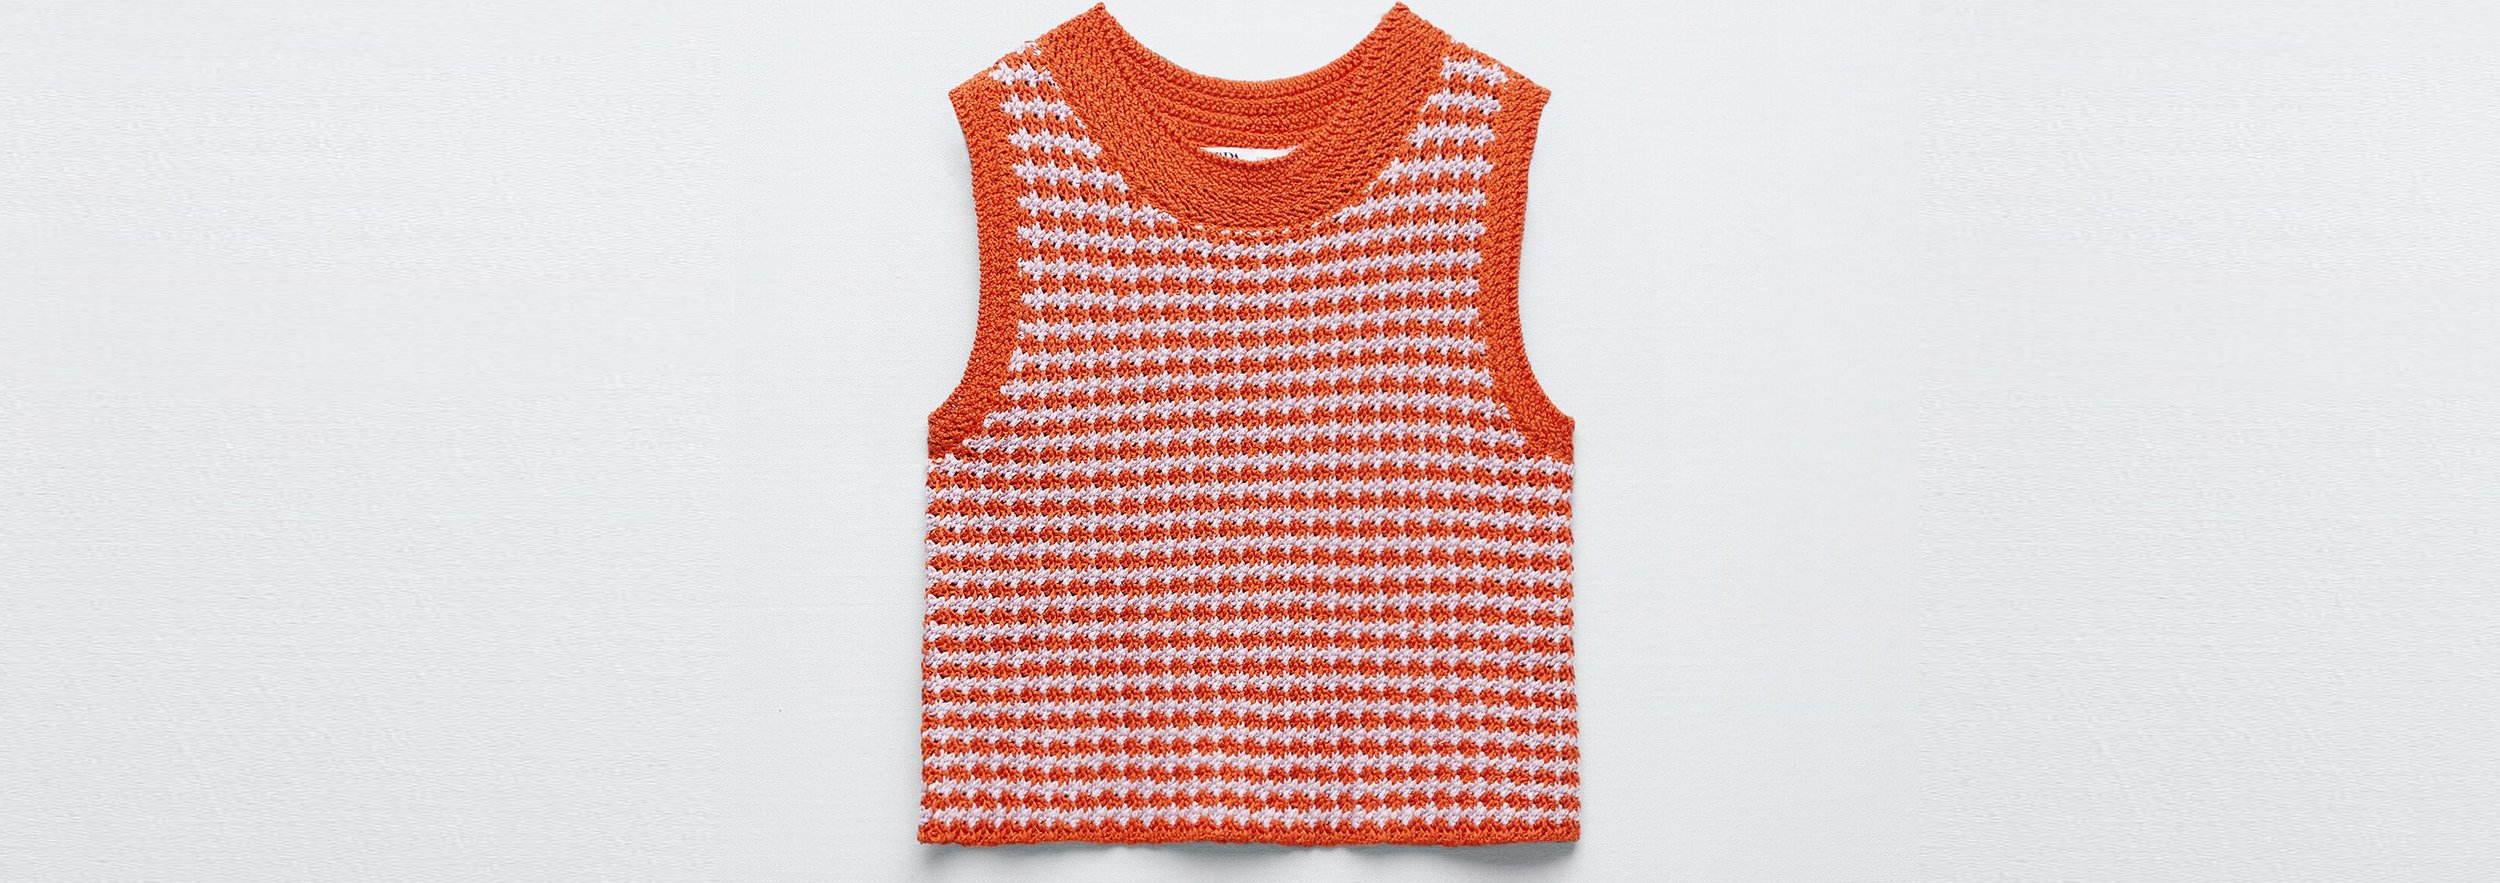 10 Zara Check Crochet Top €25.99,